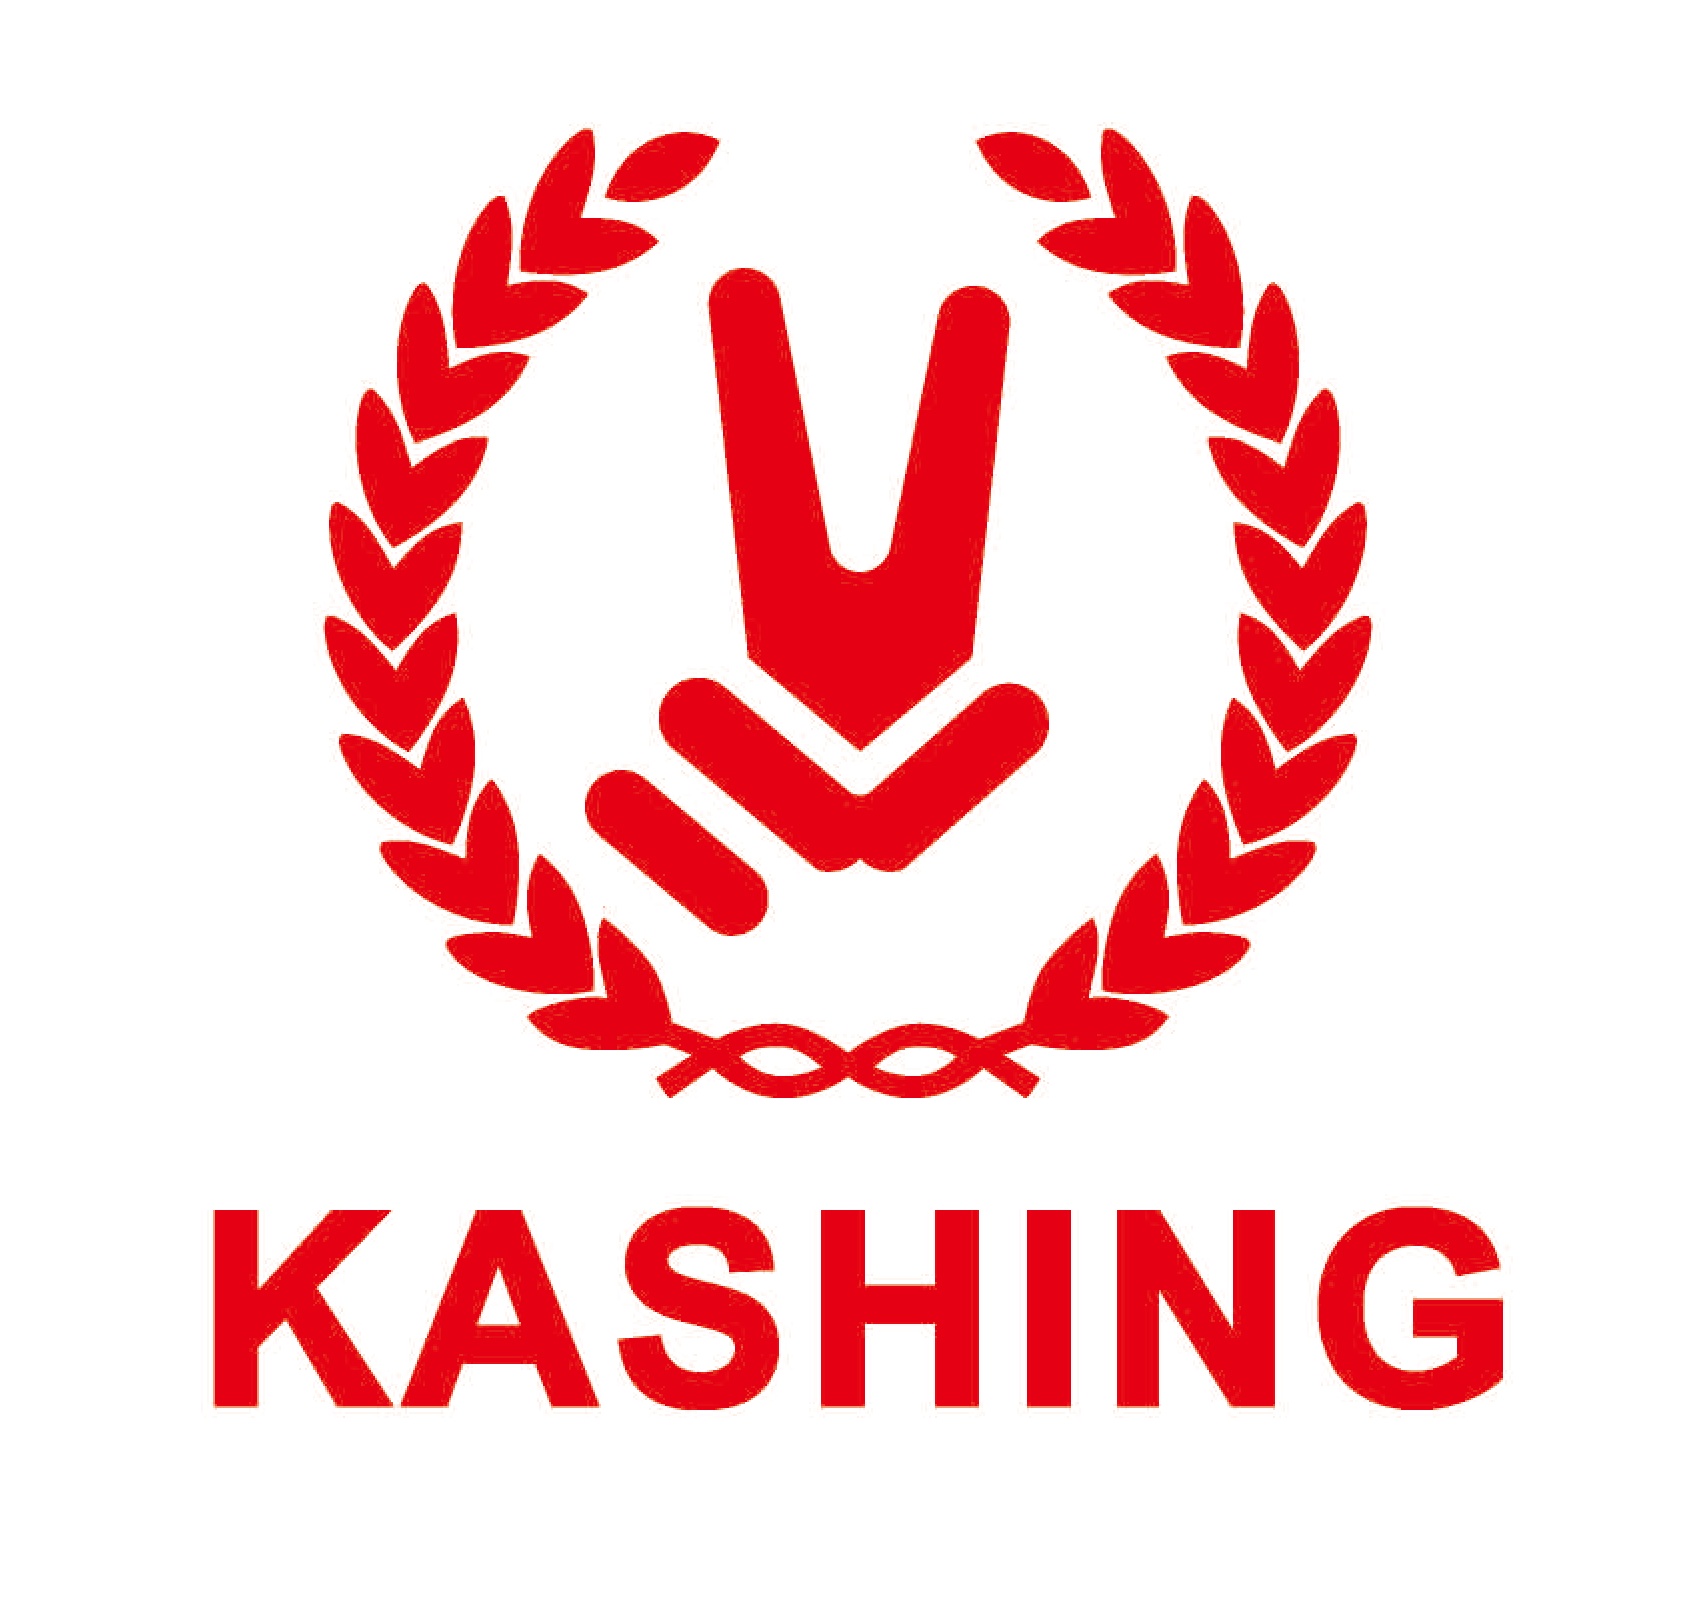 WINGAR-KASHING INDUSTRIAL (XIAMEN) CO., LTD